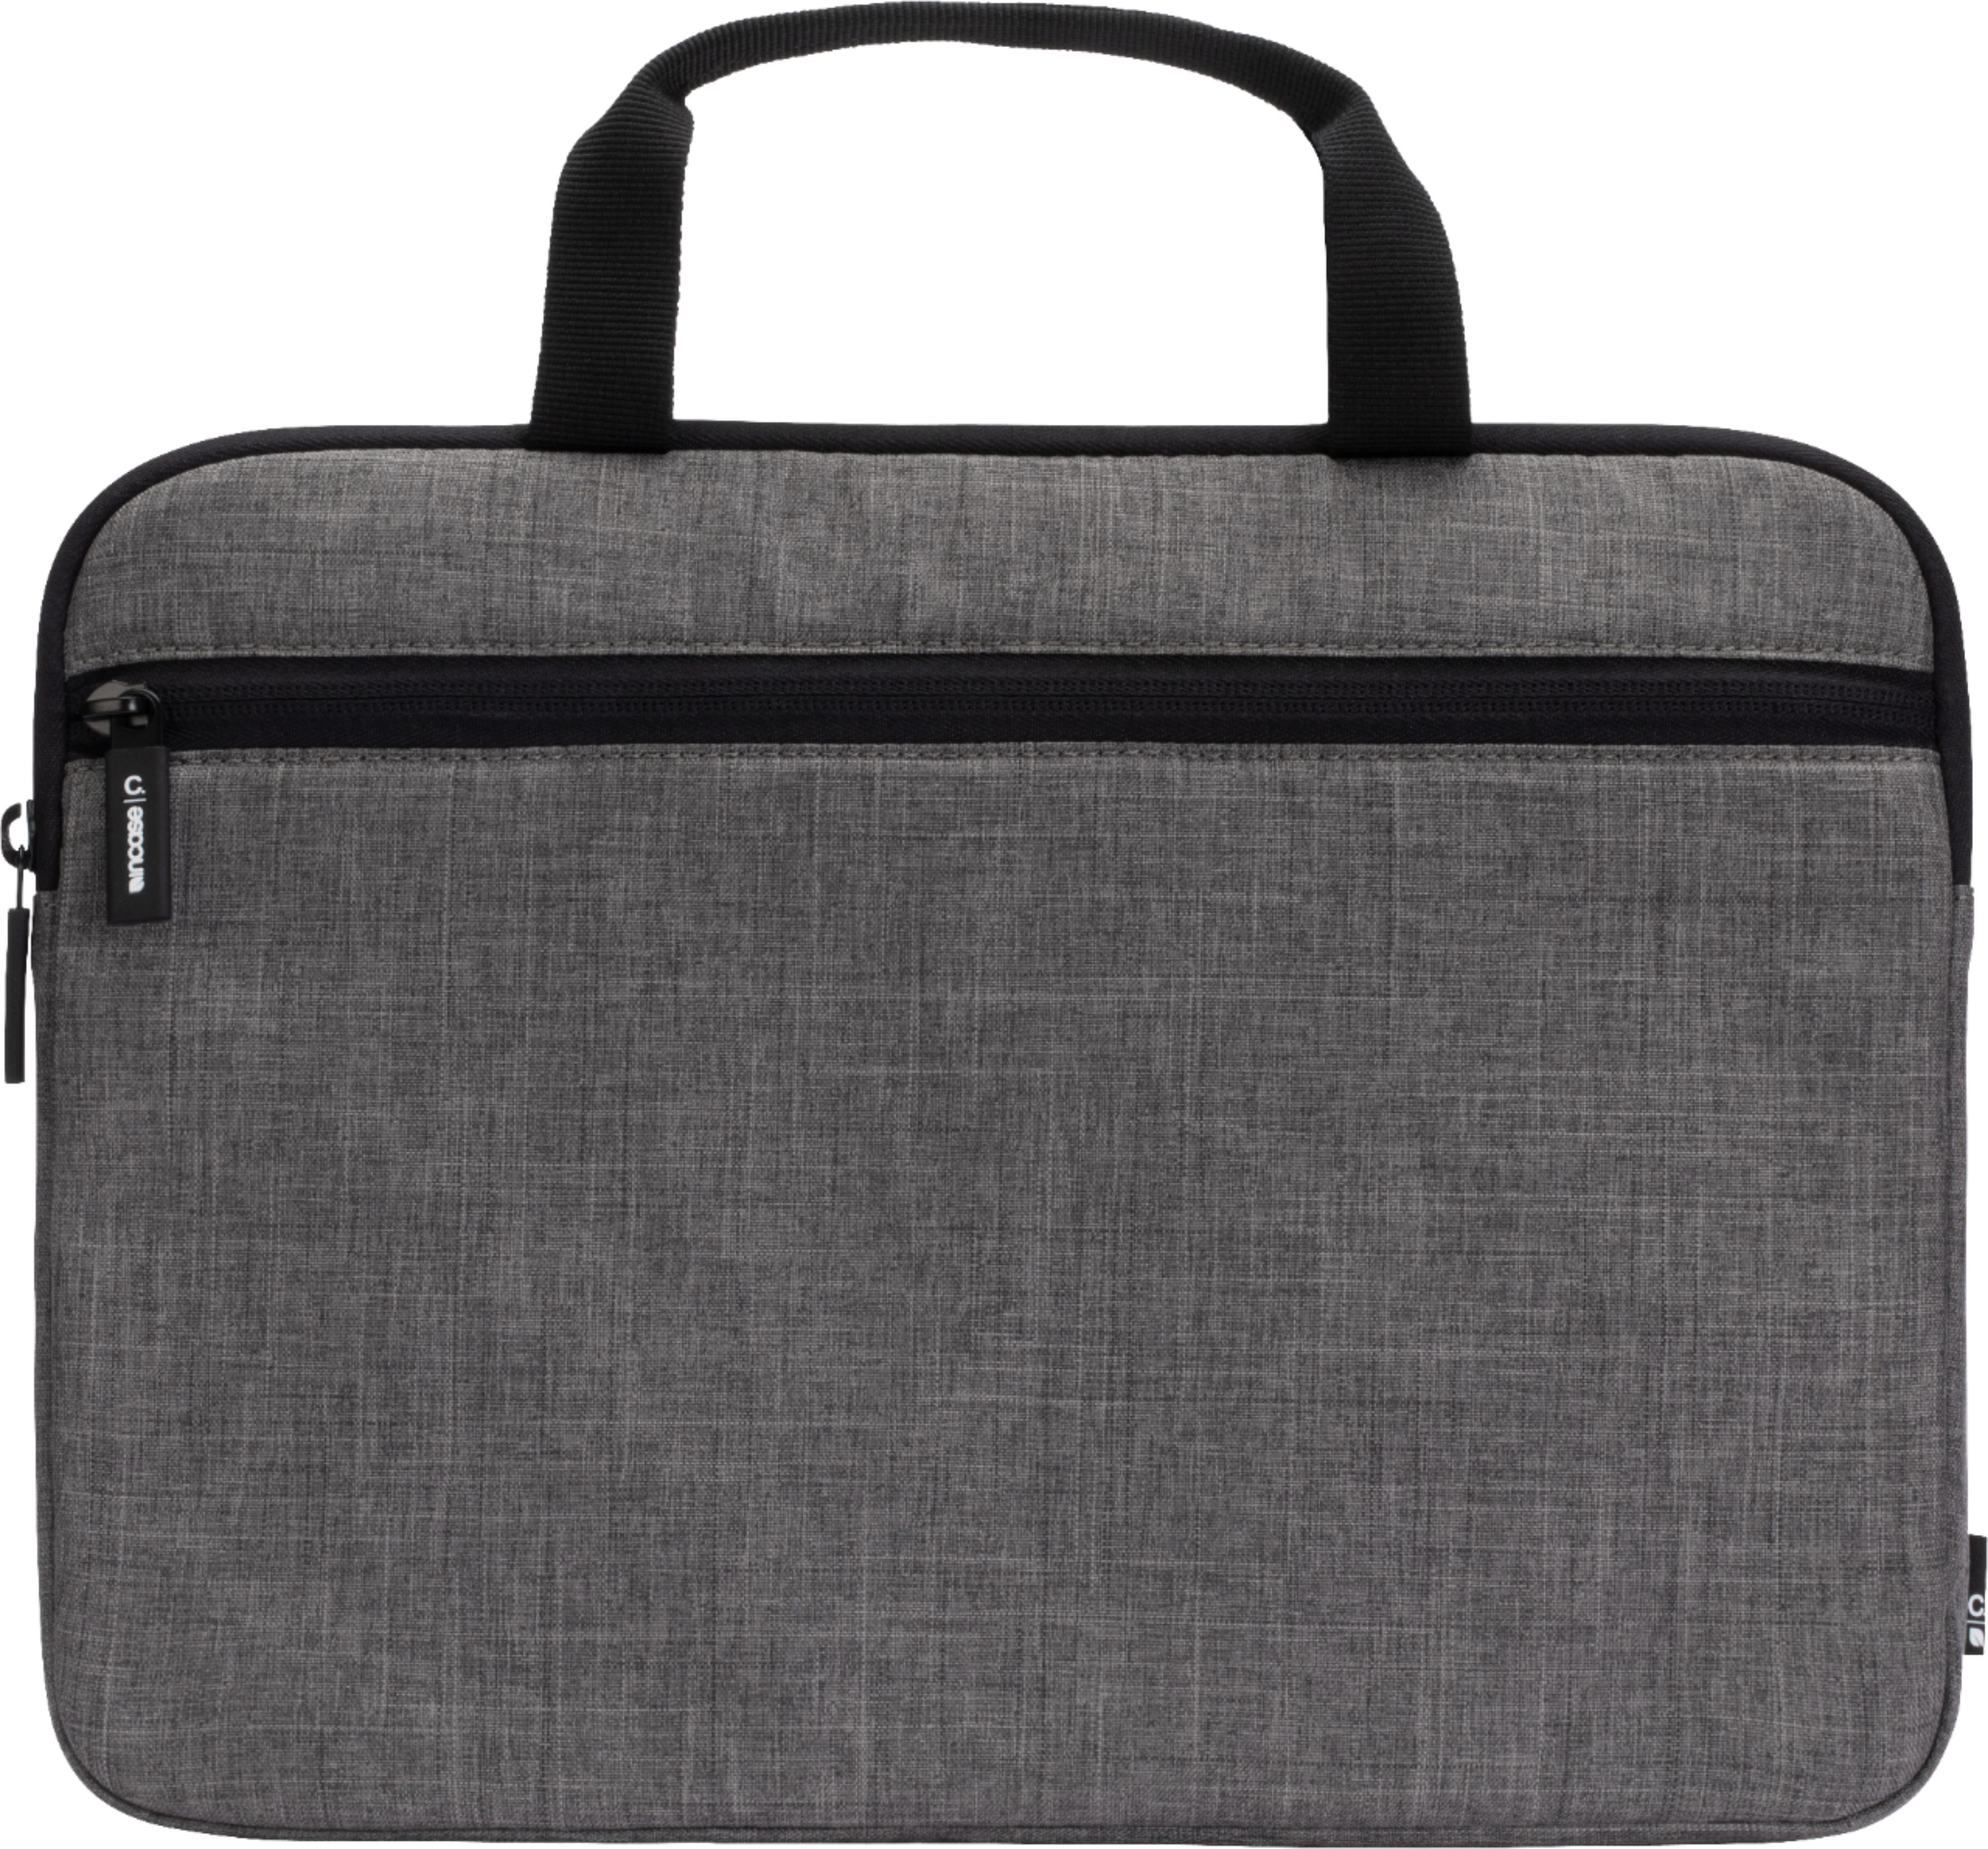 Laptop Messenger Baseball Sport Seamless Pattern Handbag Laptop Bag Compatible 13-13.3 inch MacBook Air Pro 15 inch